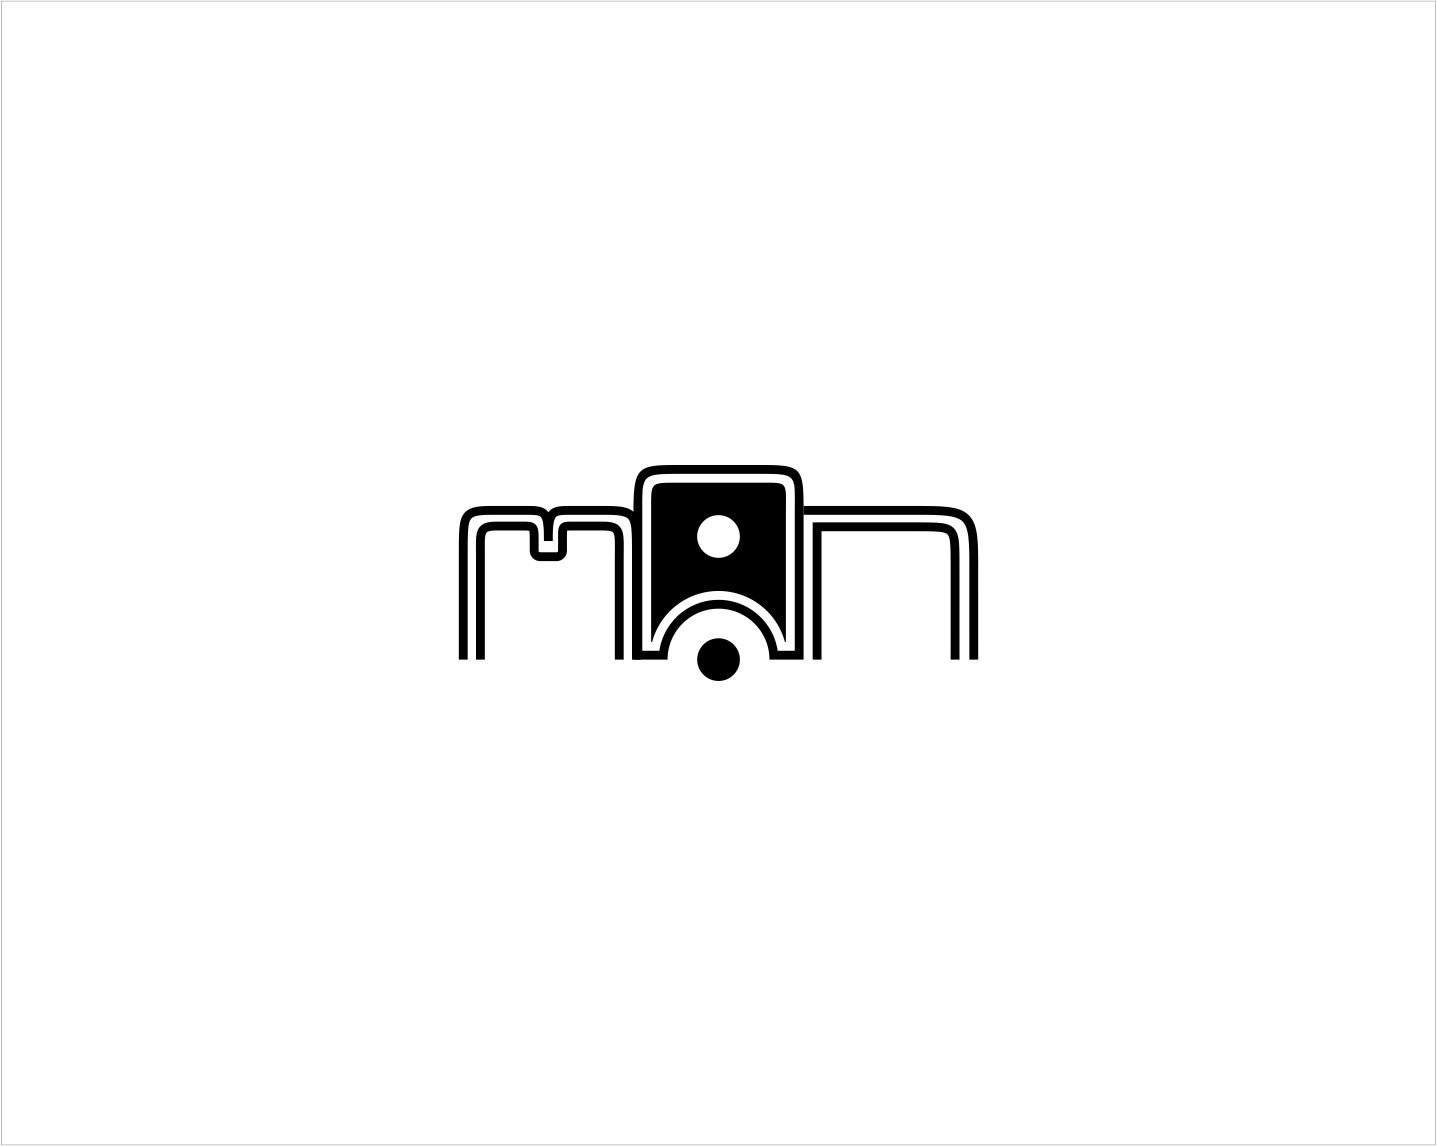 Логотип для MAN - дизайнер georgian